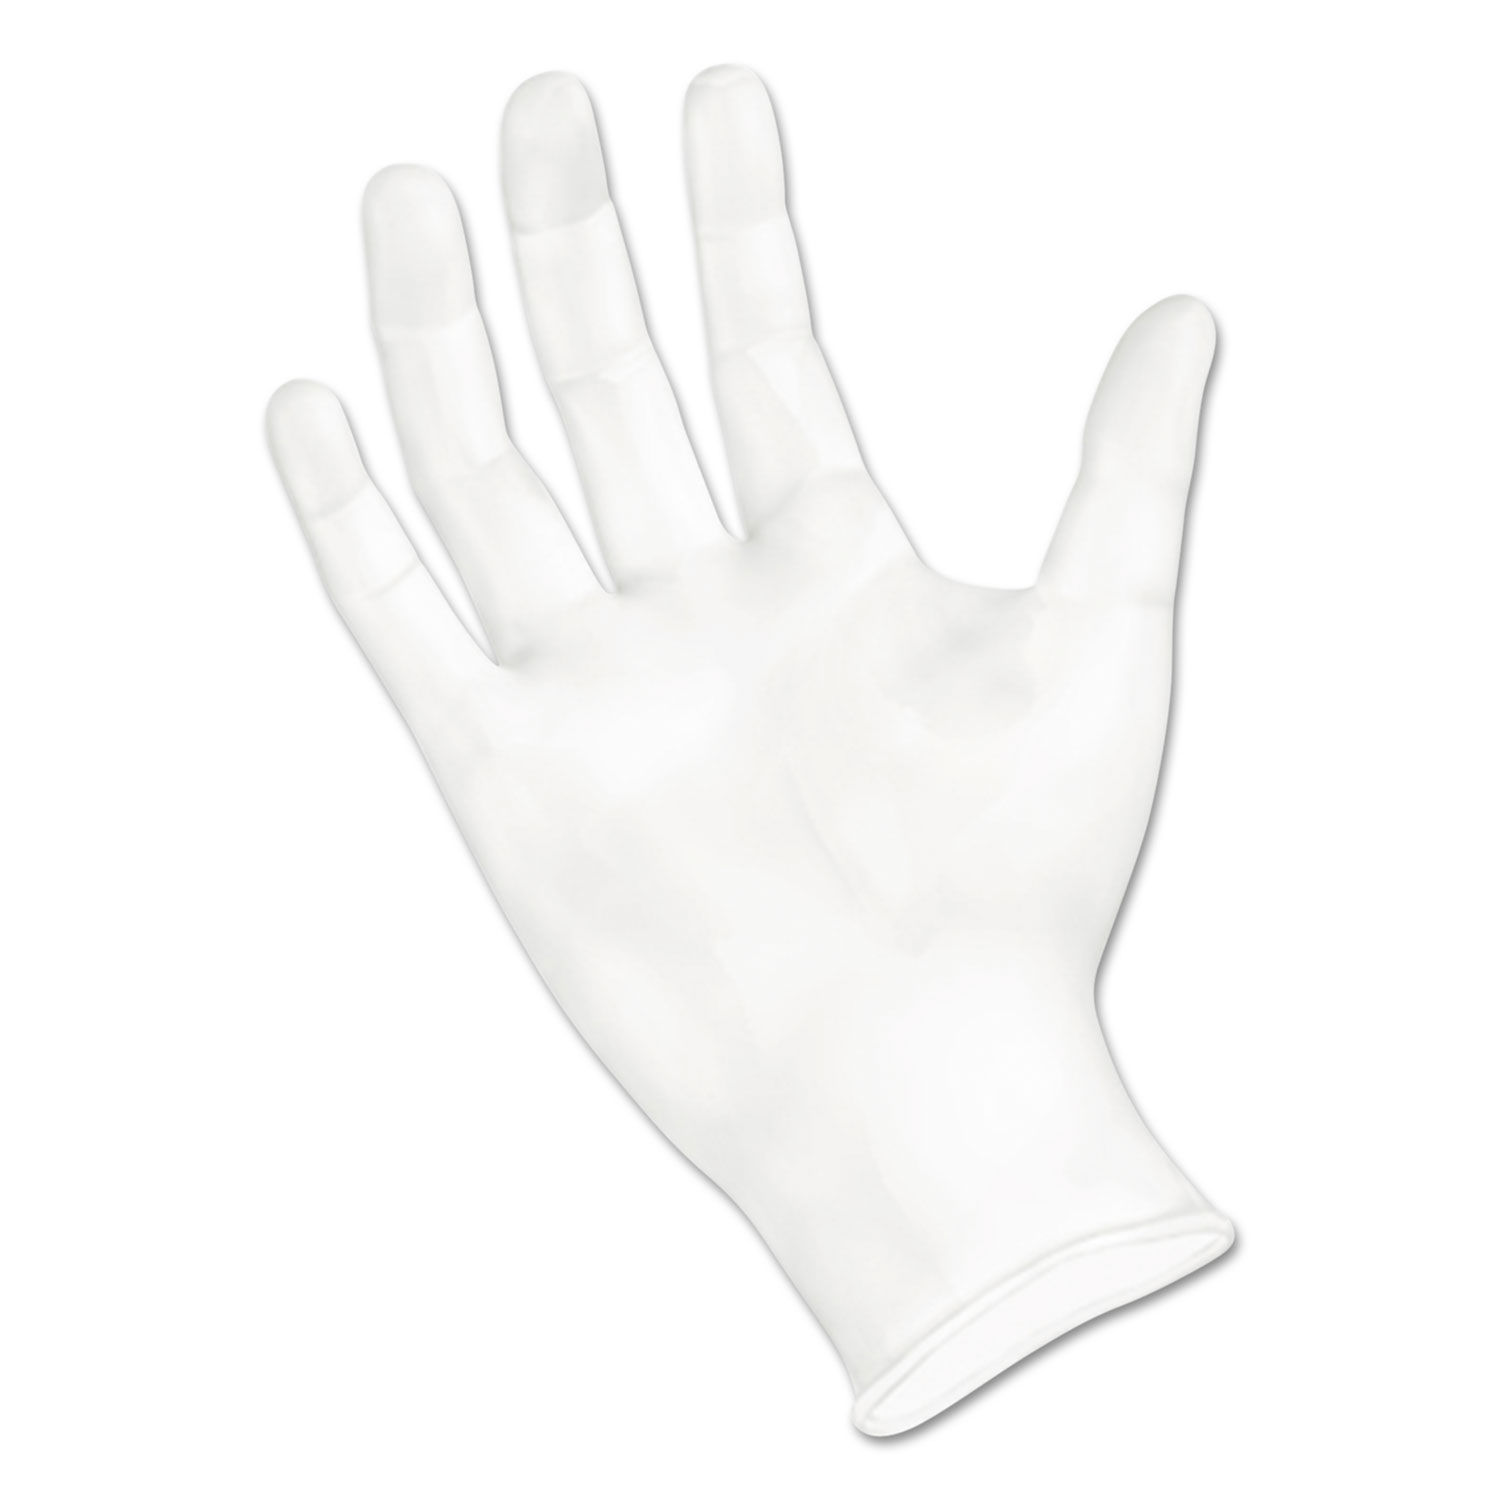 General Purpose Vinyl Gloves, Powder/Latex-Free, 2 3/5mil, Medium, Clear, 100/Bx